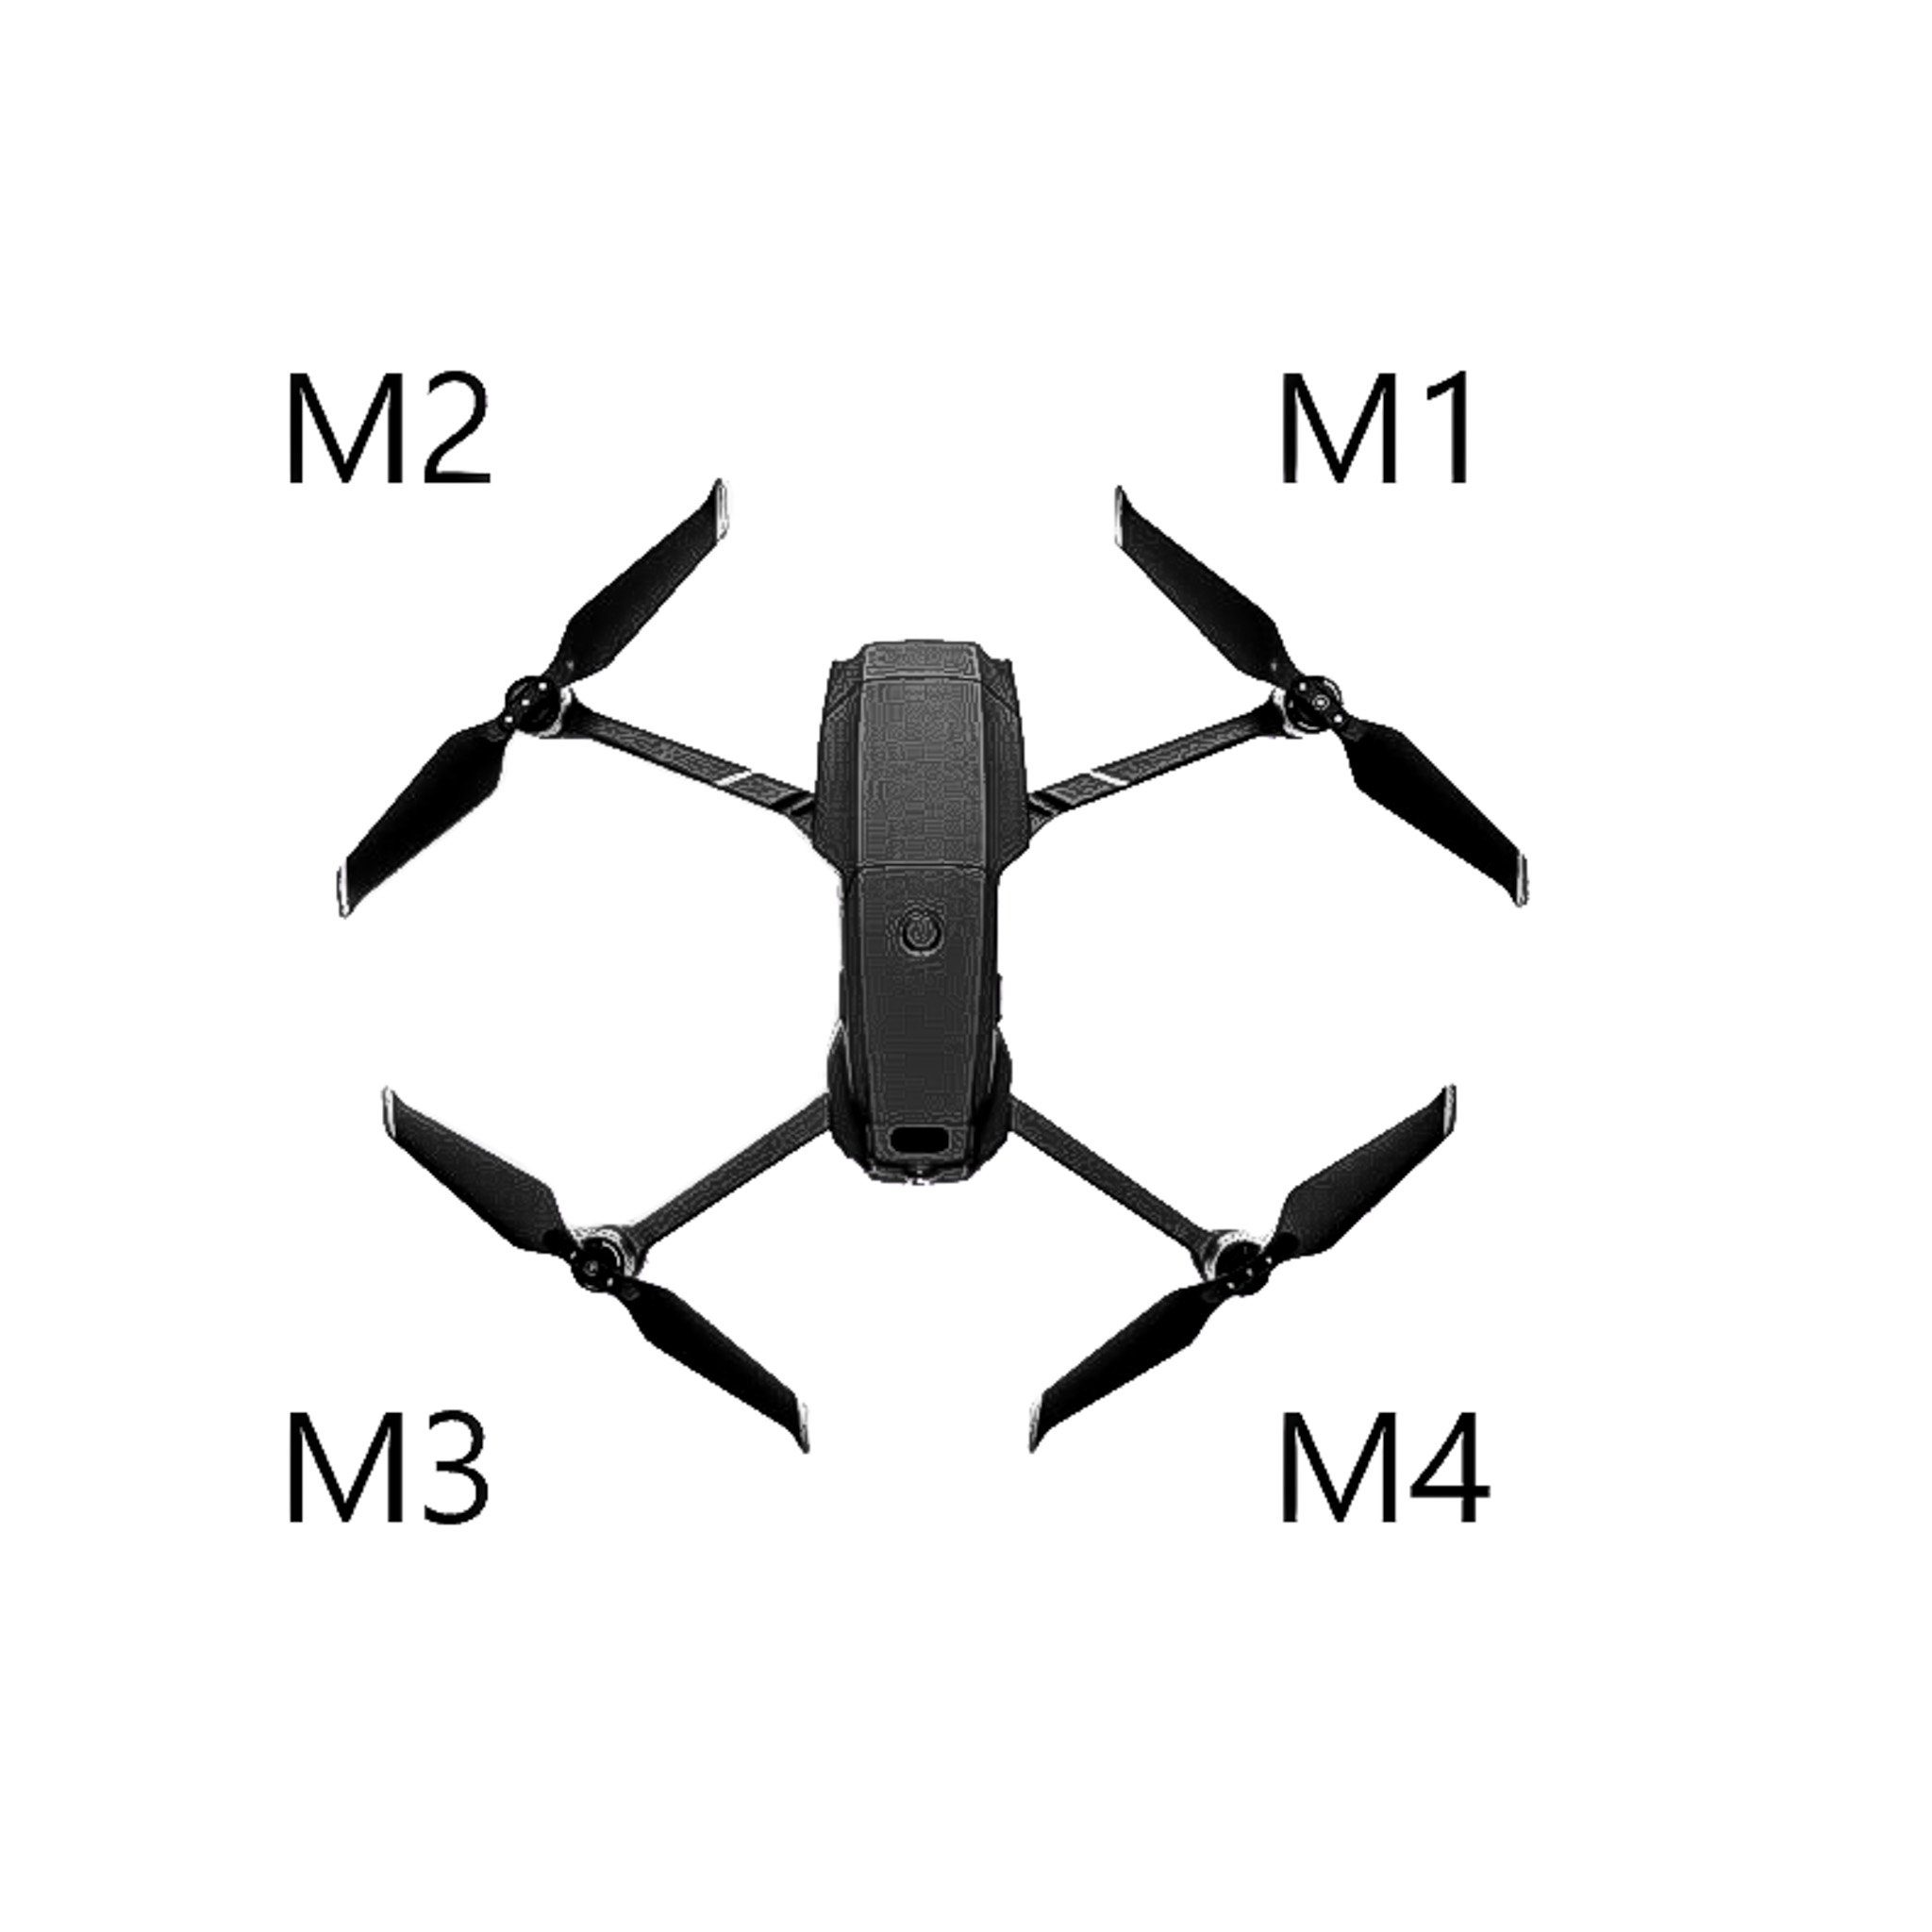 M3 hinten Mavic Motor 2 DJI Arm - links DJI Drohne Zubehör